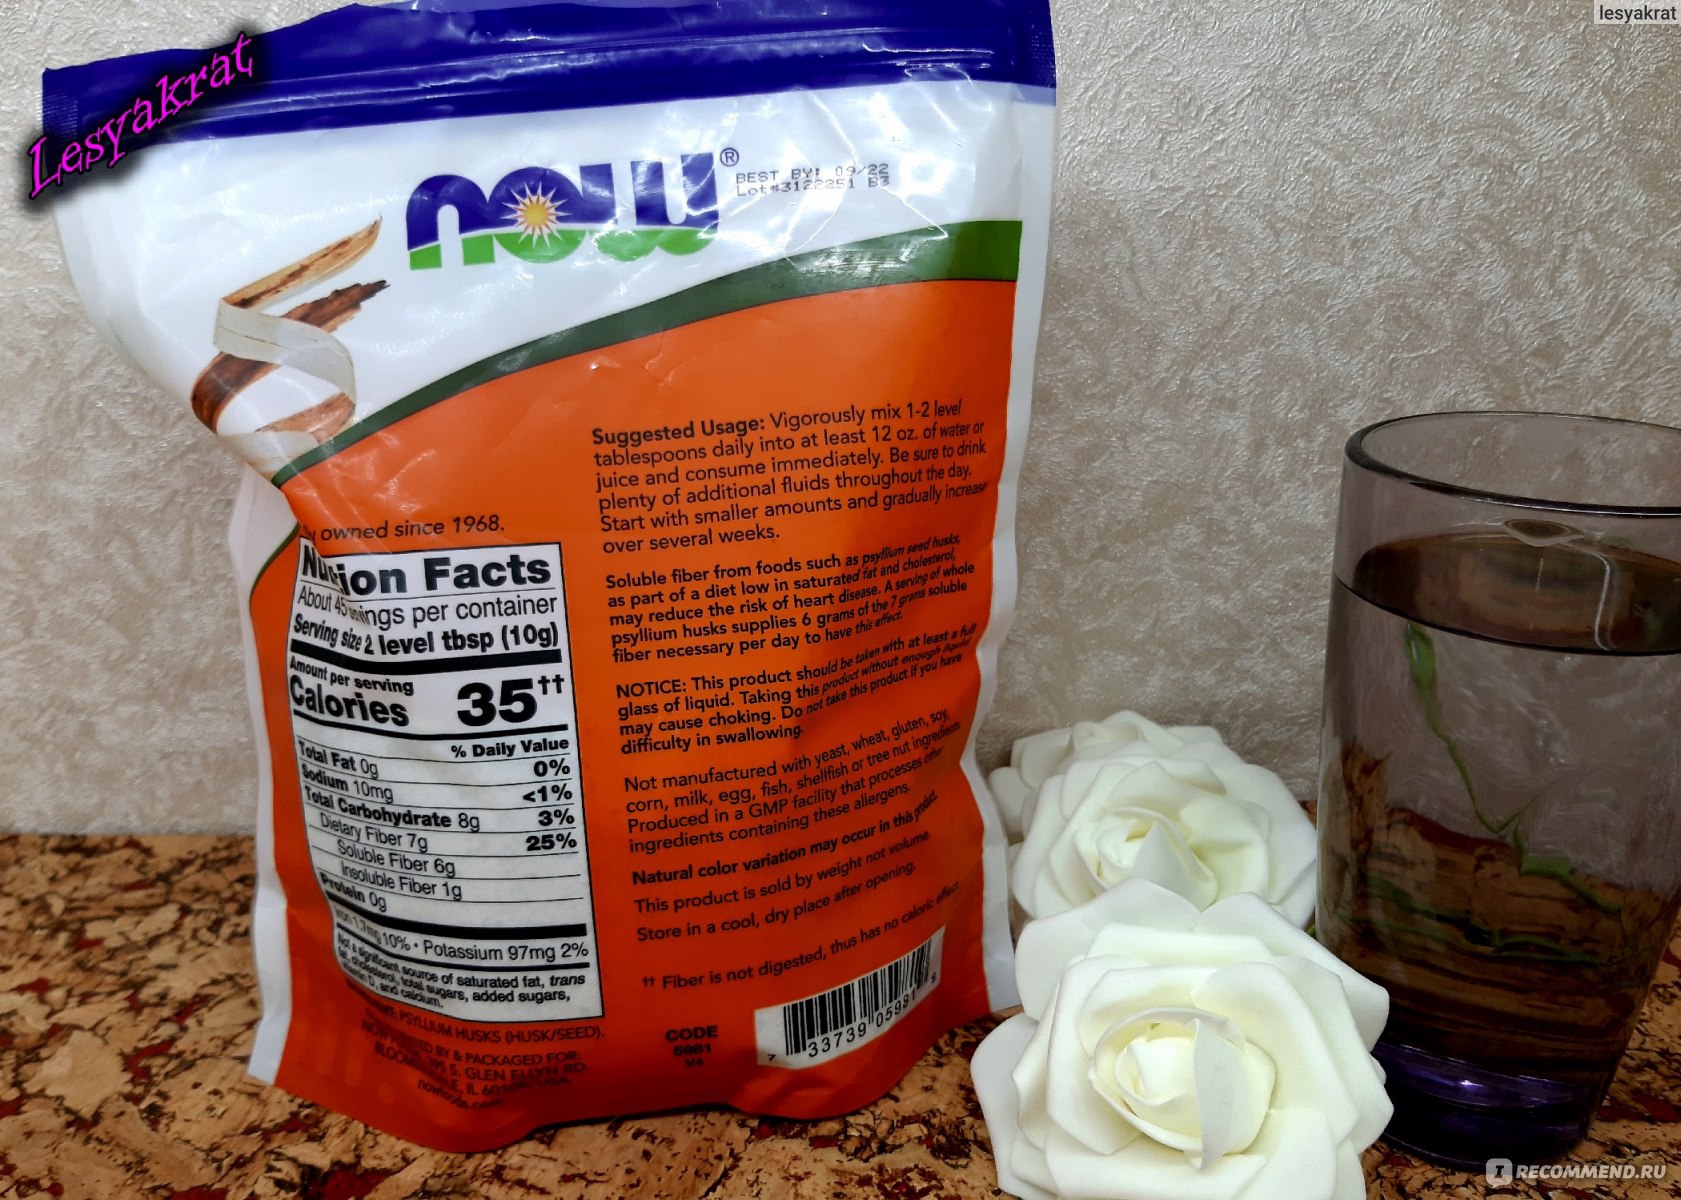 БАД Now Foods Whole Psyllium Husk или шелуха оболочек семян подорожника фото